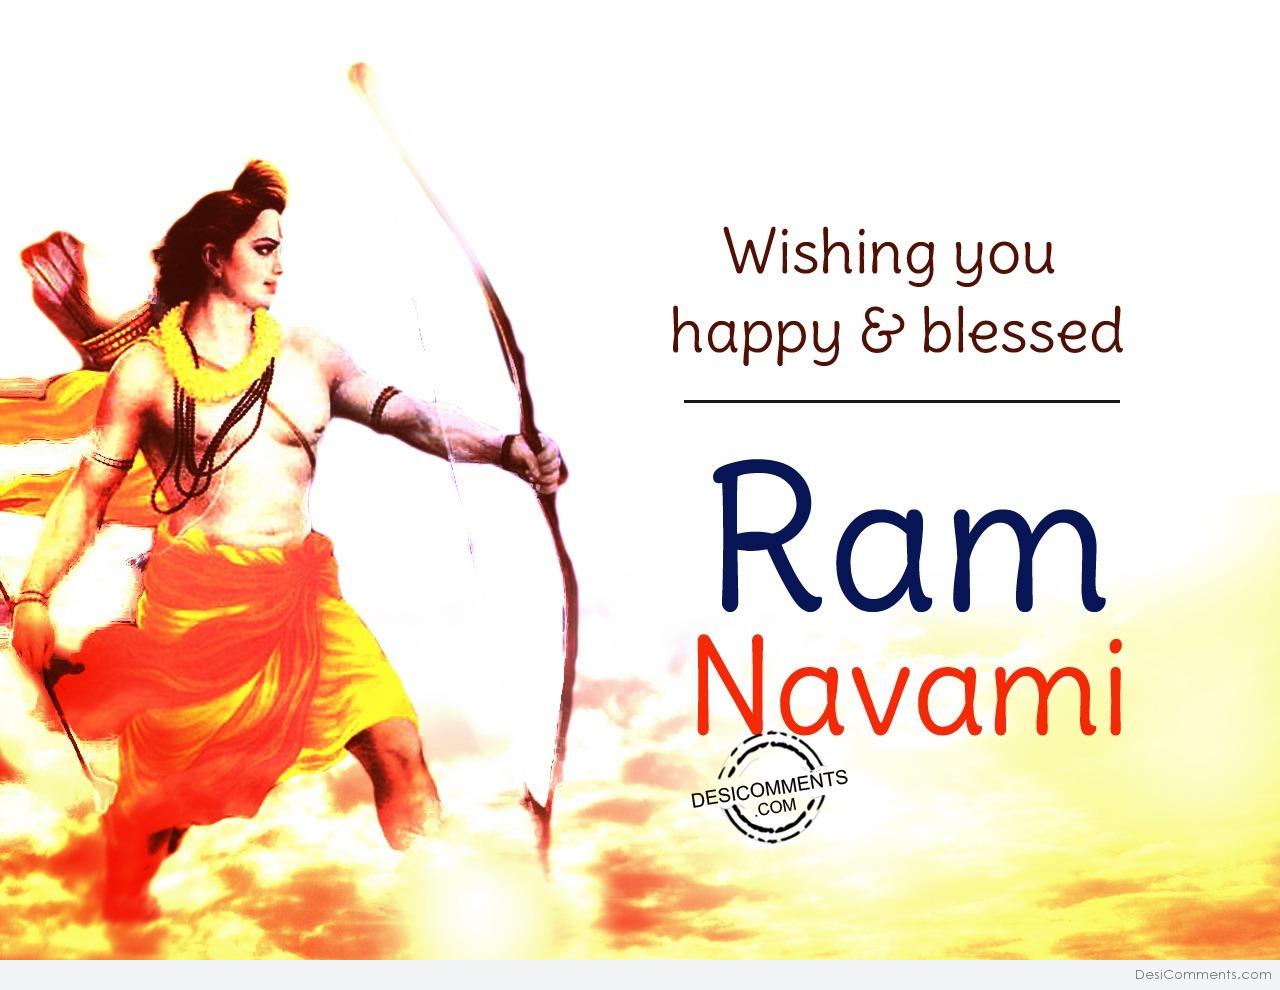 Ram Navami Picture, Image, Photo